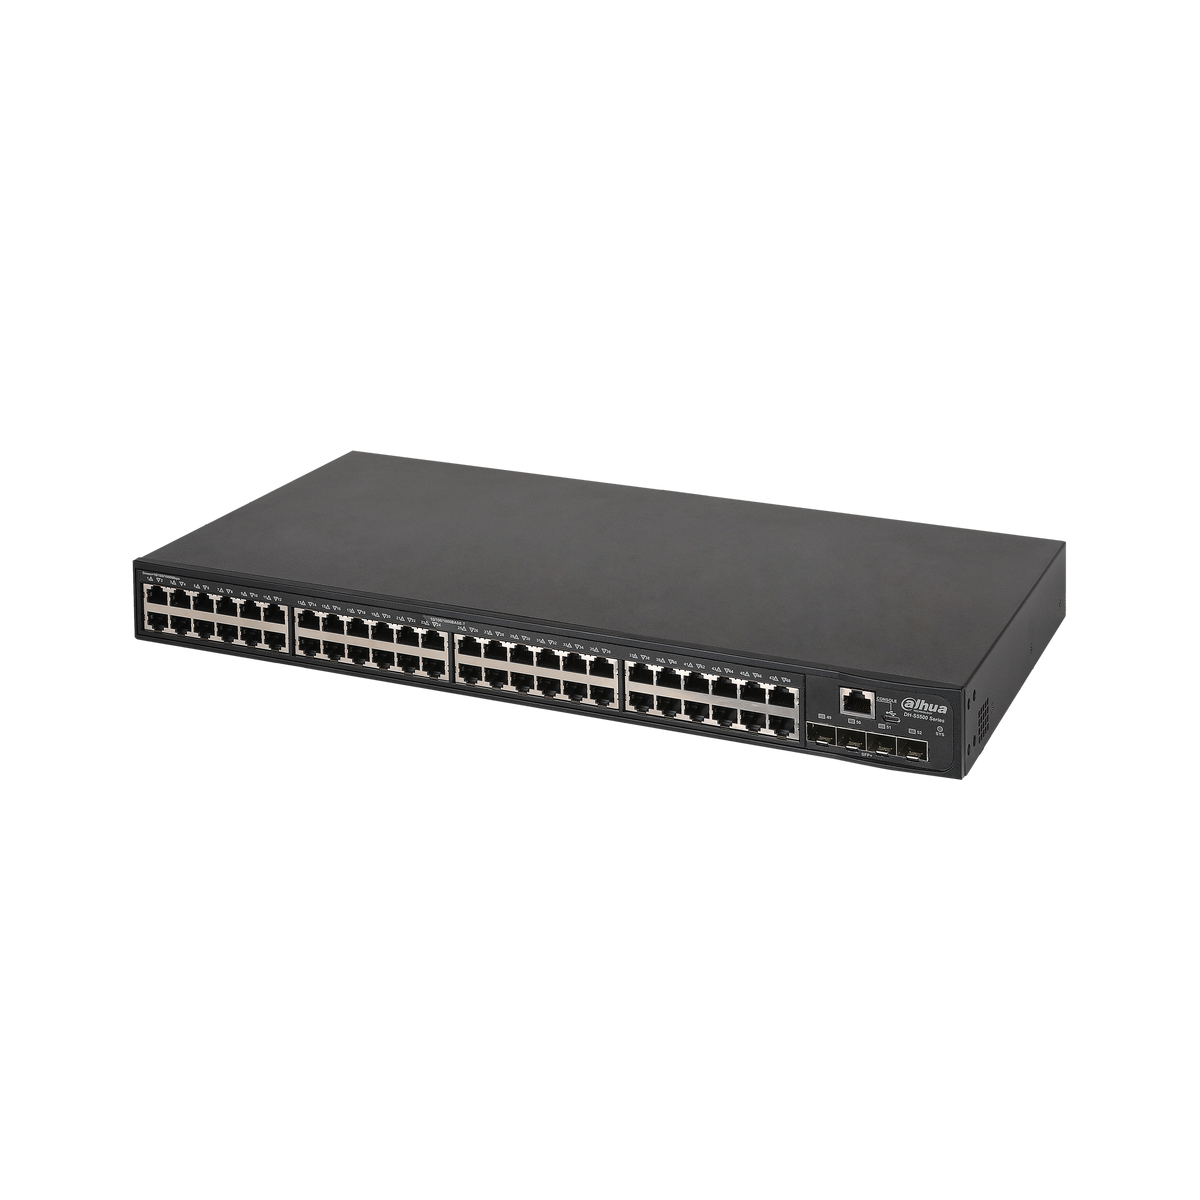 DAHUA S5500-48GT4XF-E 52-Port Managed Gigabit Switch with 48-Port RJ45 and 4-Port 10G SFP+